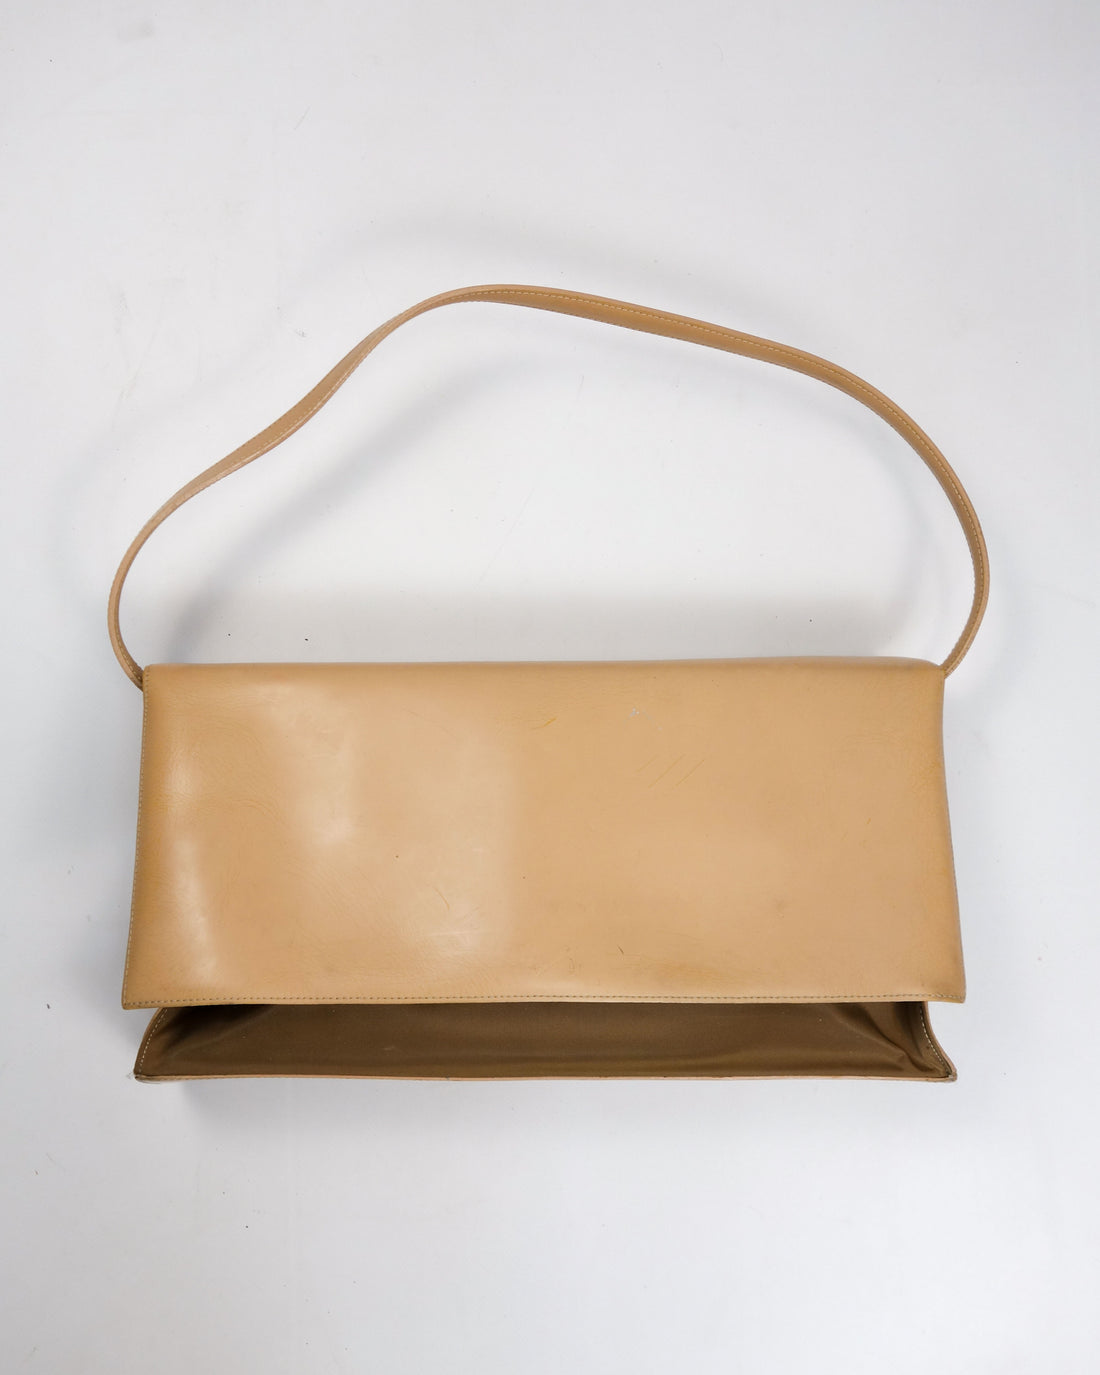 Jean Paul Gaultier Tan Case Bag 1990's